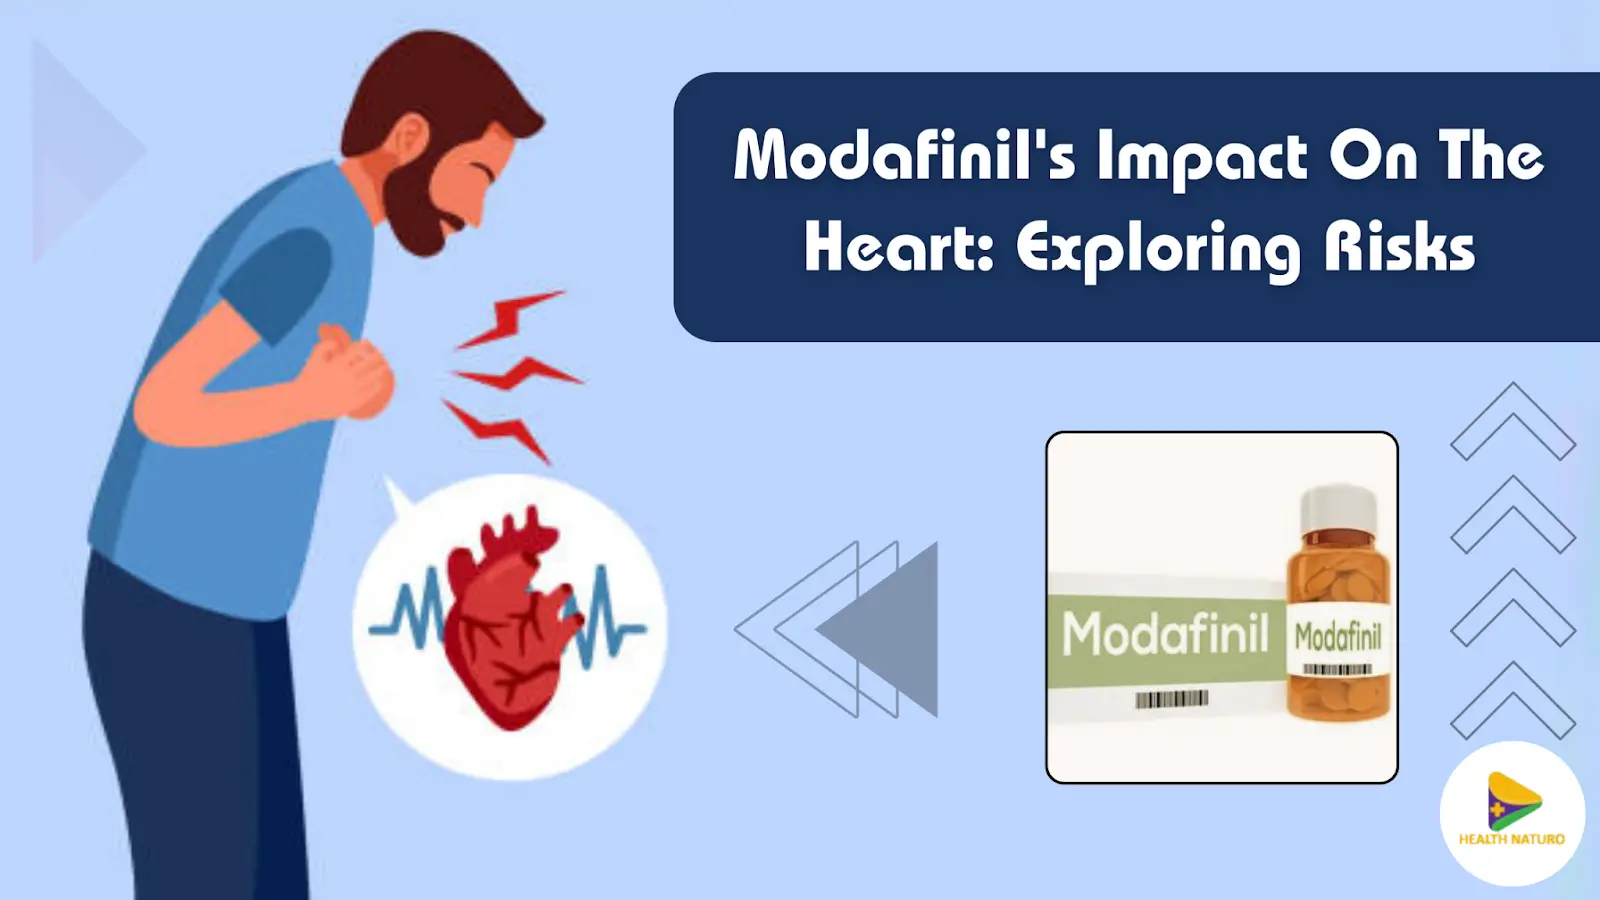 Modafinil's Impact On The Heart: Exploring Risks